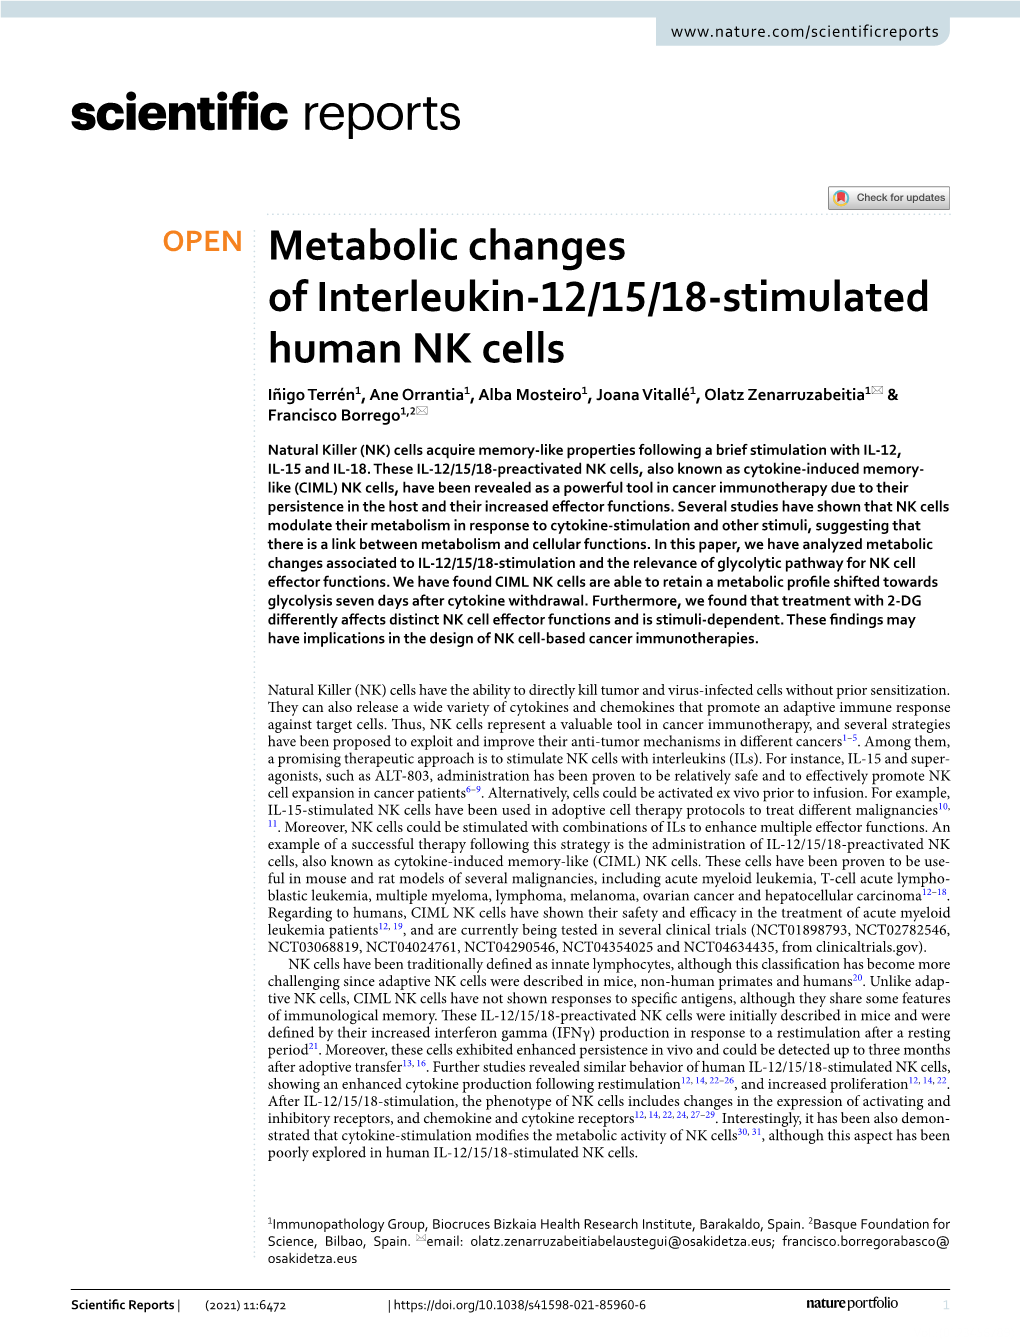 Metabolic Changes of Interleukin-12/15/18-Stimulated